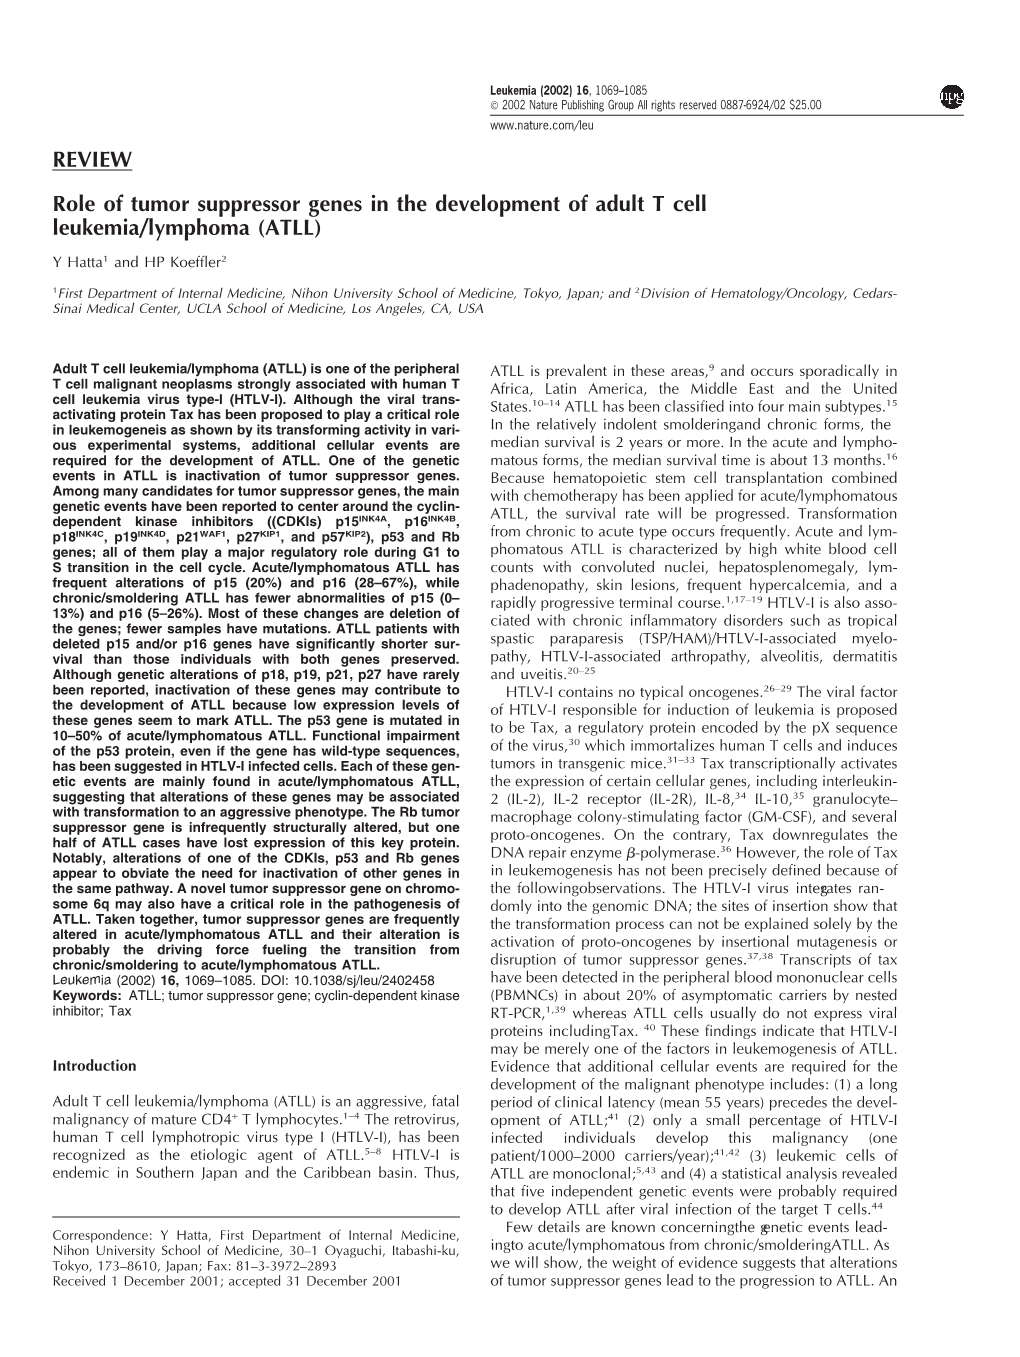 REVIEW Role of Tumor Suppressor Genes in the Development